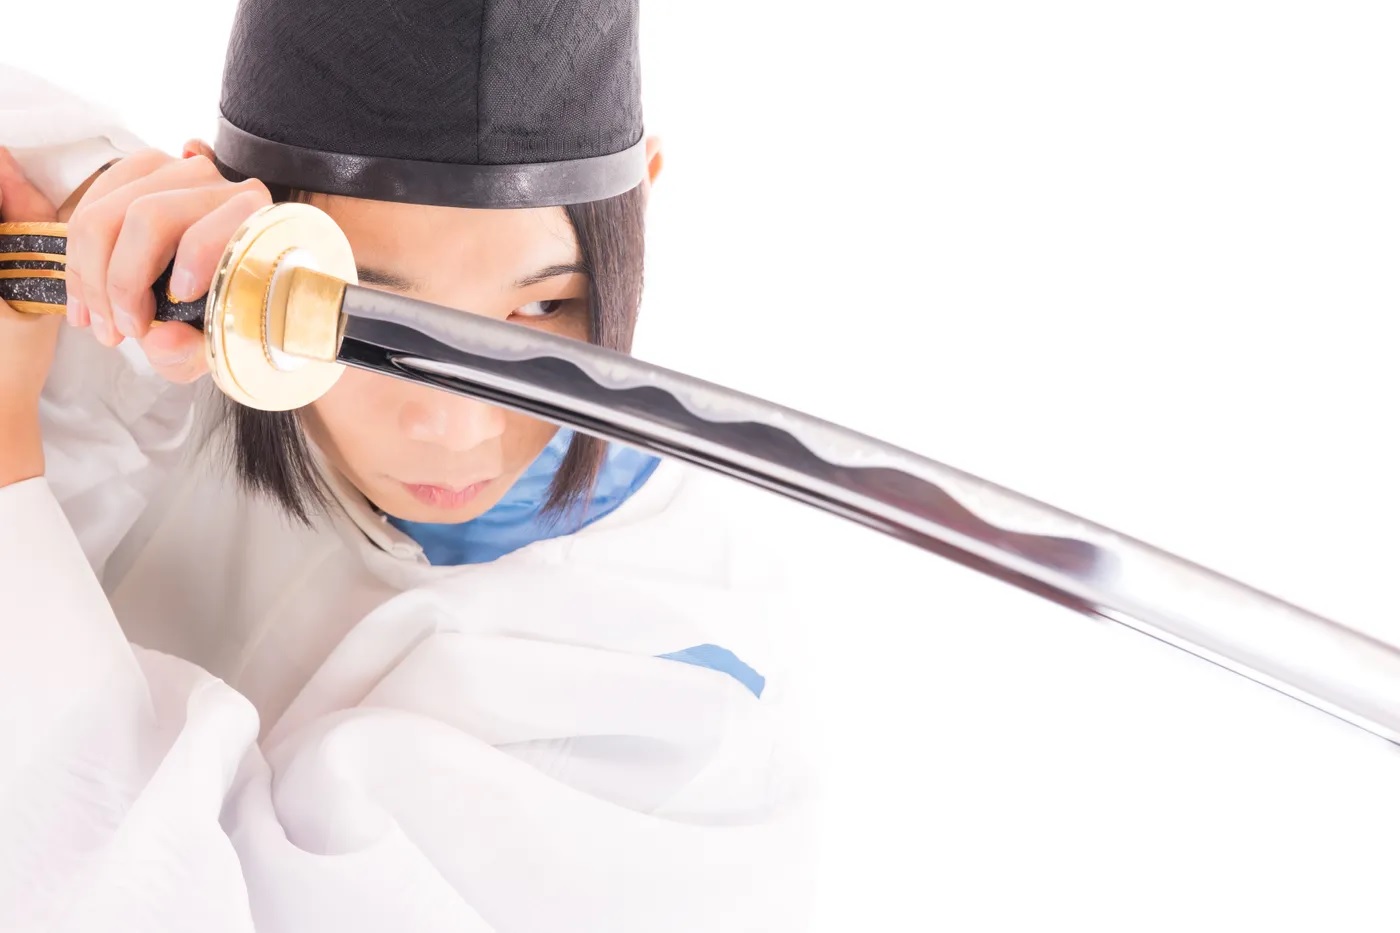 Masamune and Muramasa: The Secret History of Japan's Two Greatest Katana  Swordmakers (Part 2)